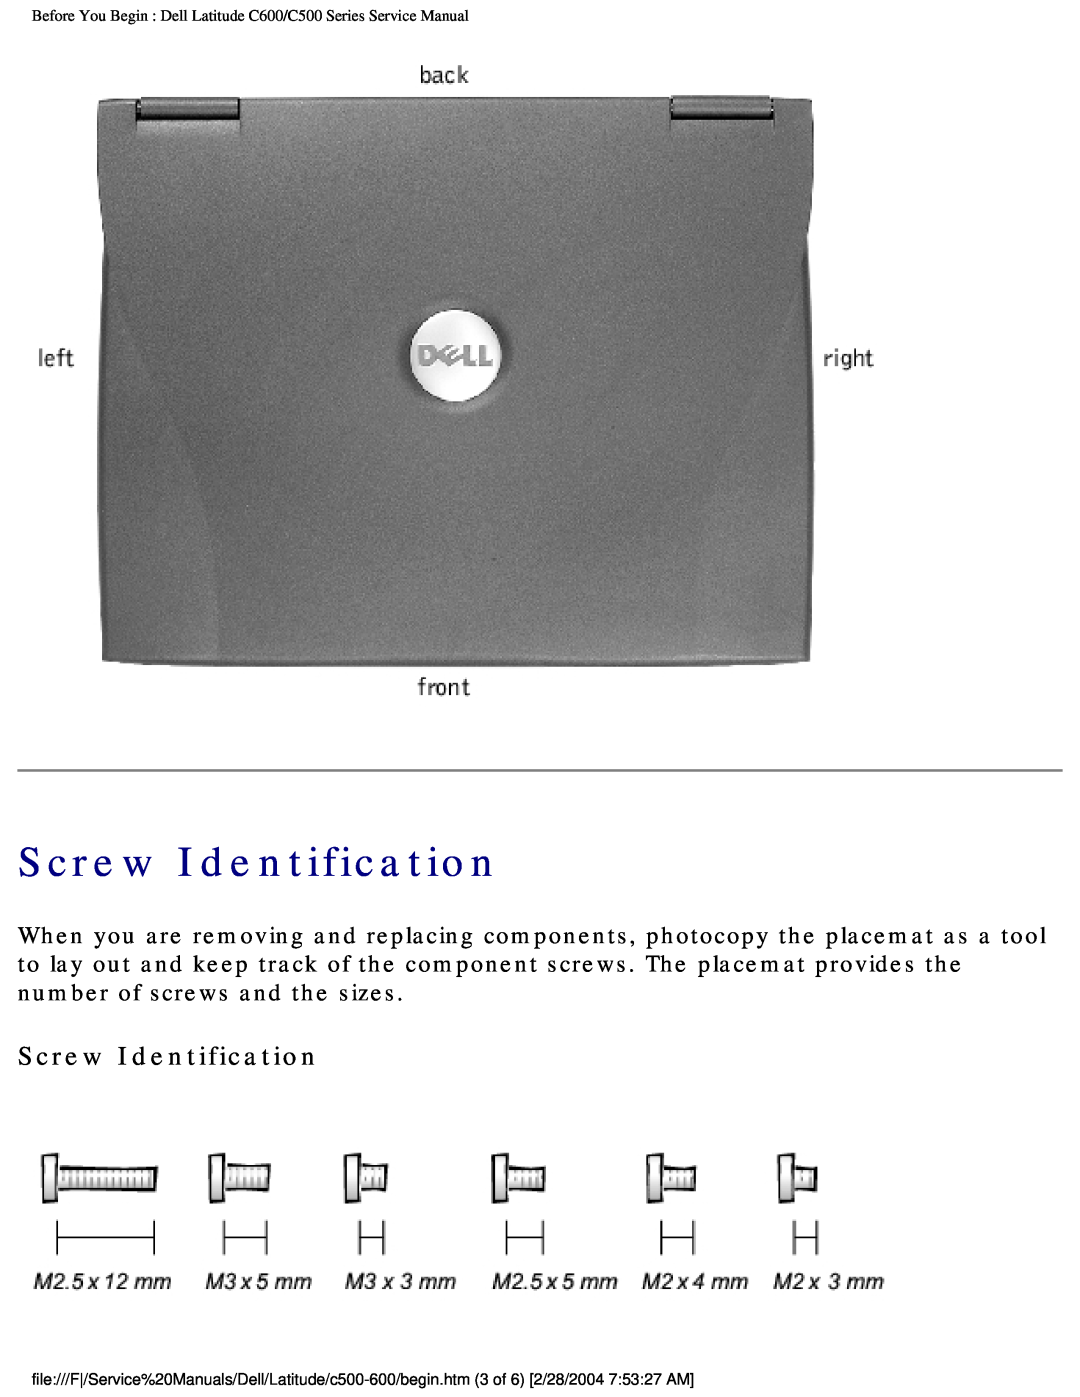 Dell manual Screw Identification, Before You Begin Dell Latitude C600/C500 Series Service Manual 